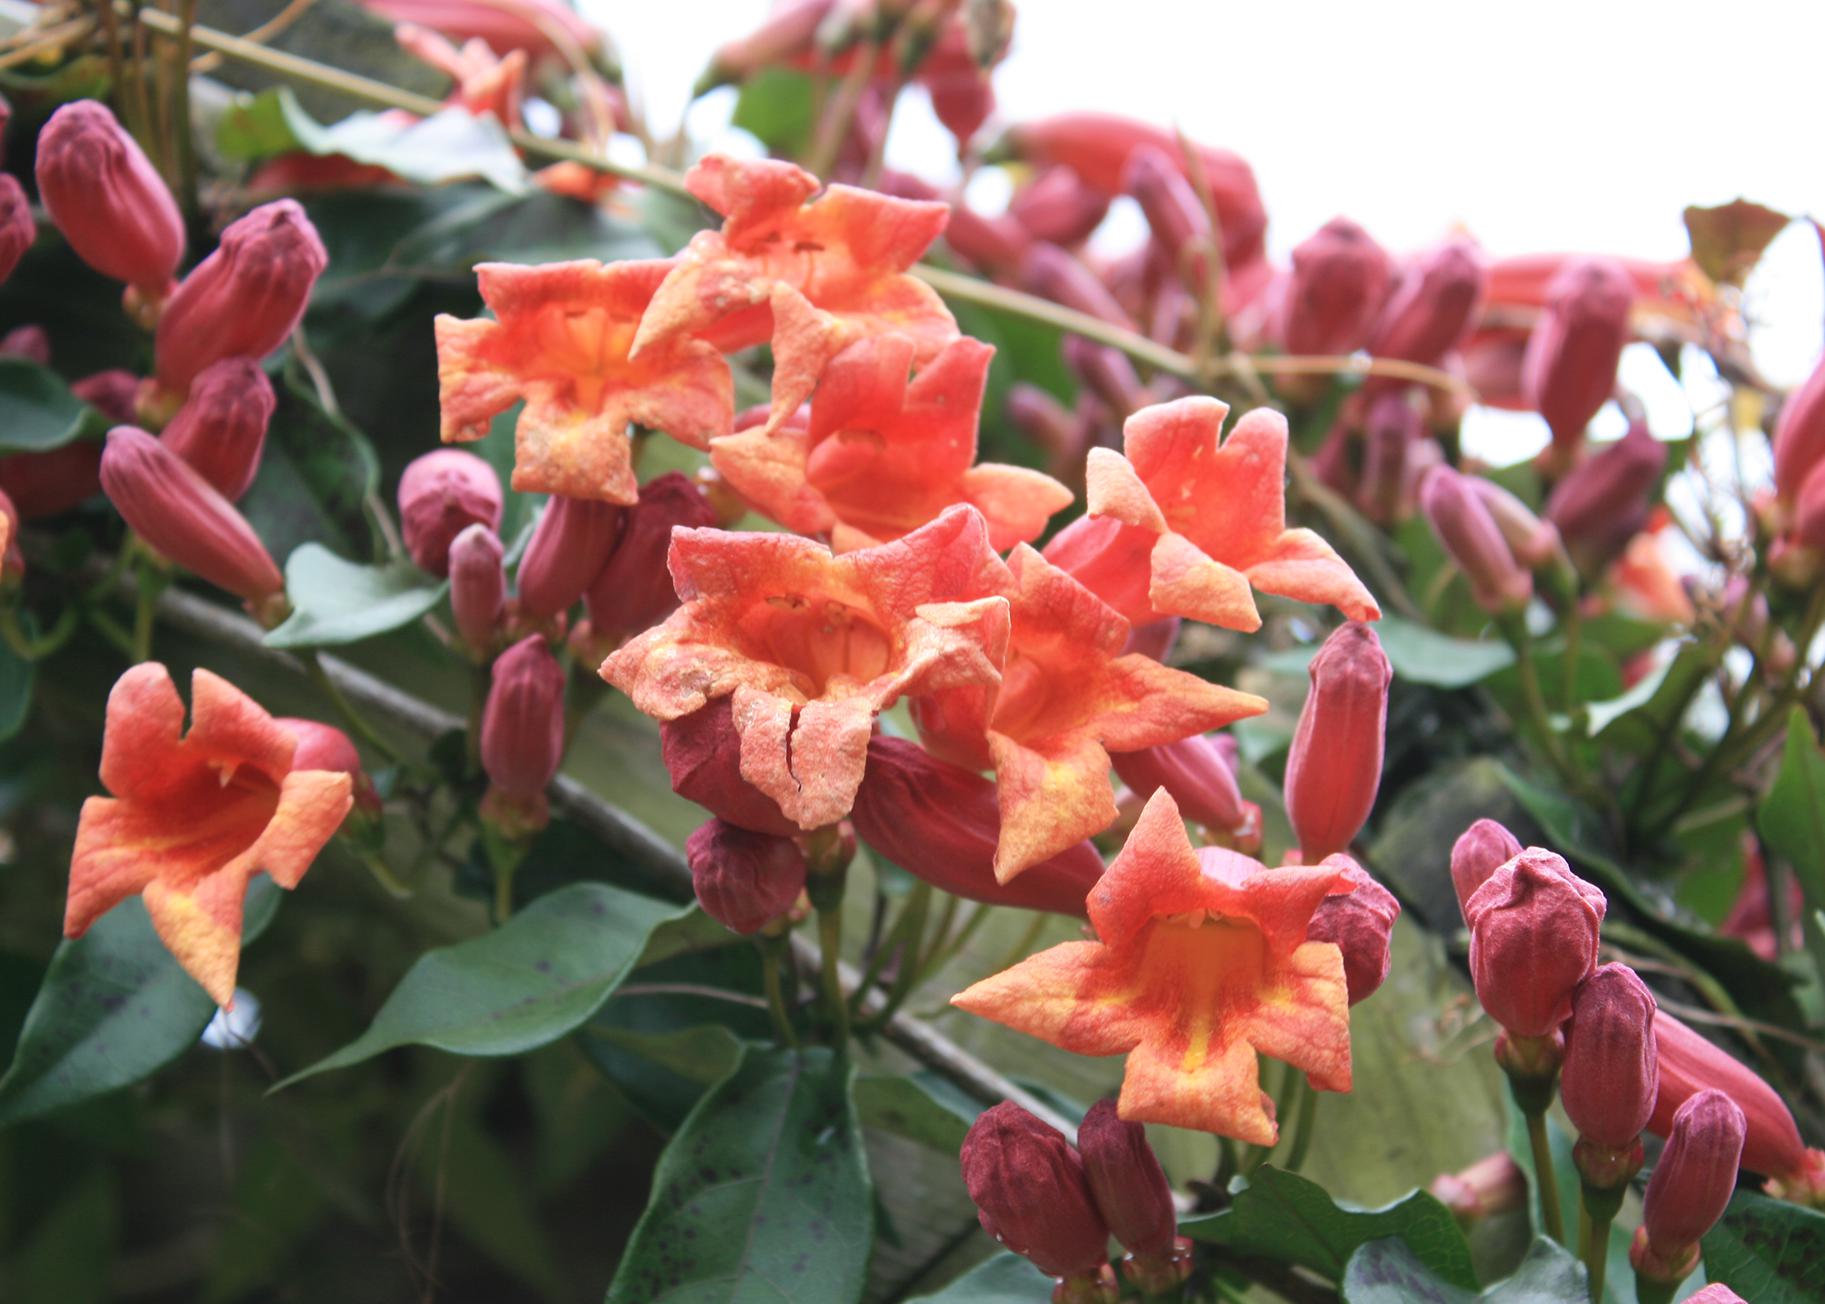 Trumpet-shaped orange flowers bloom on vines next to pink buds.